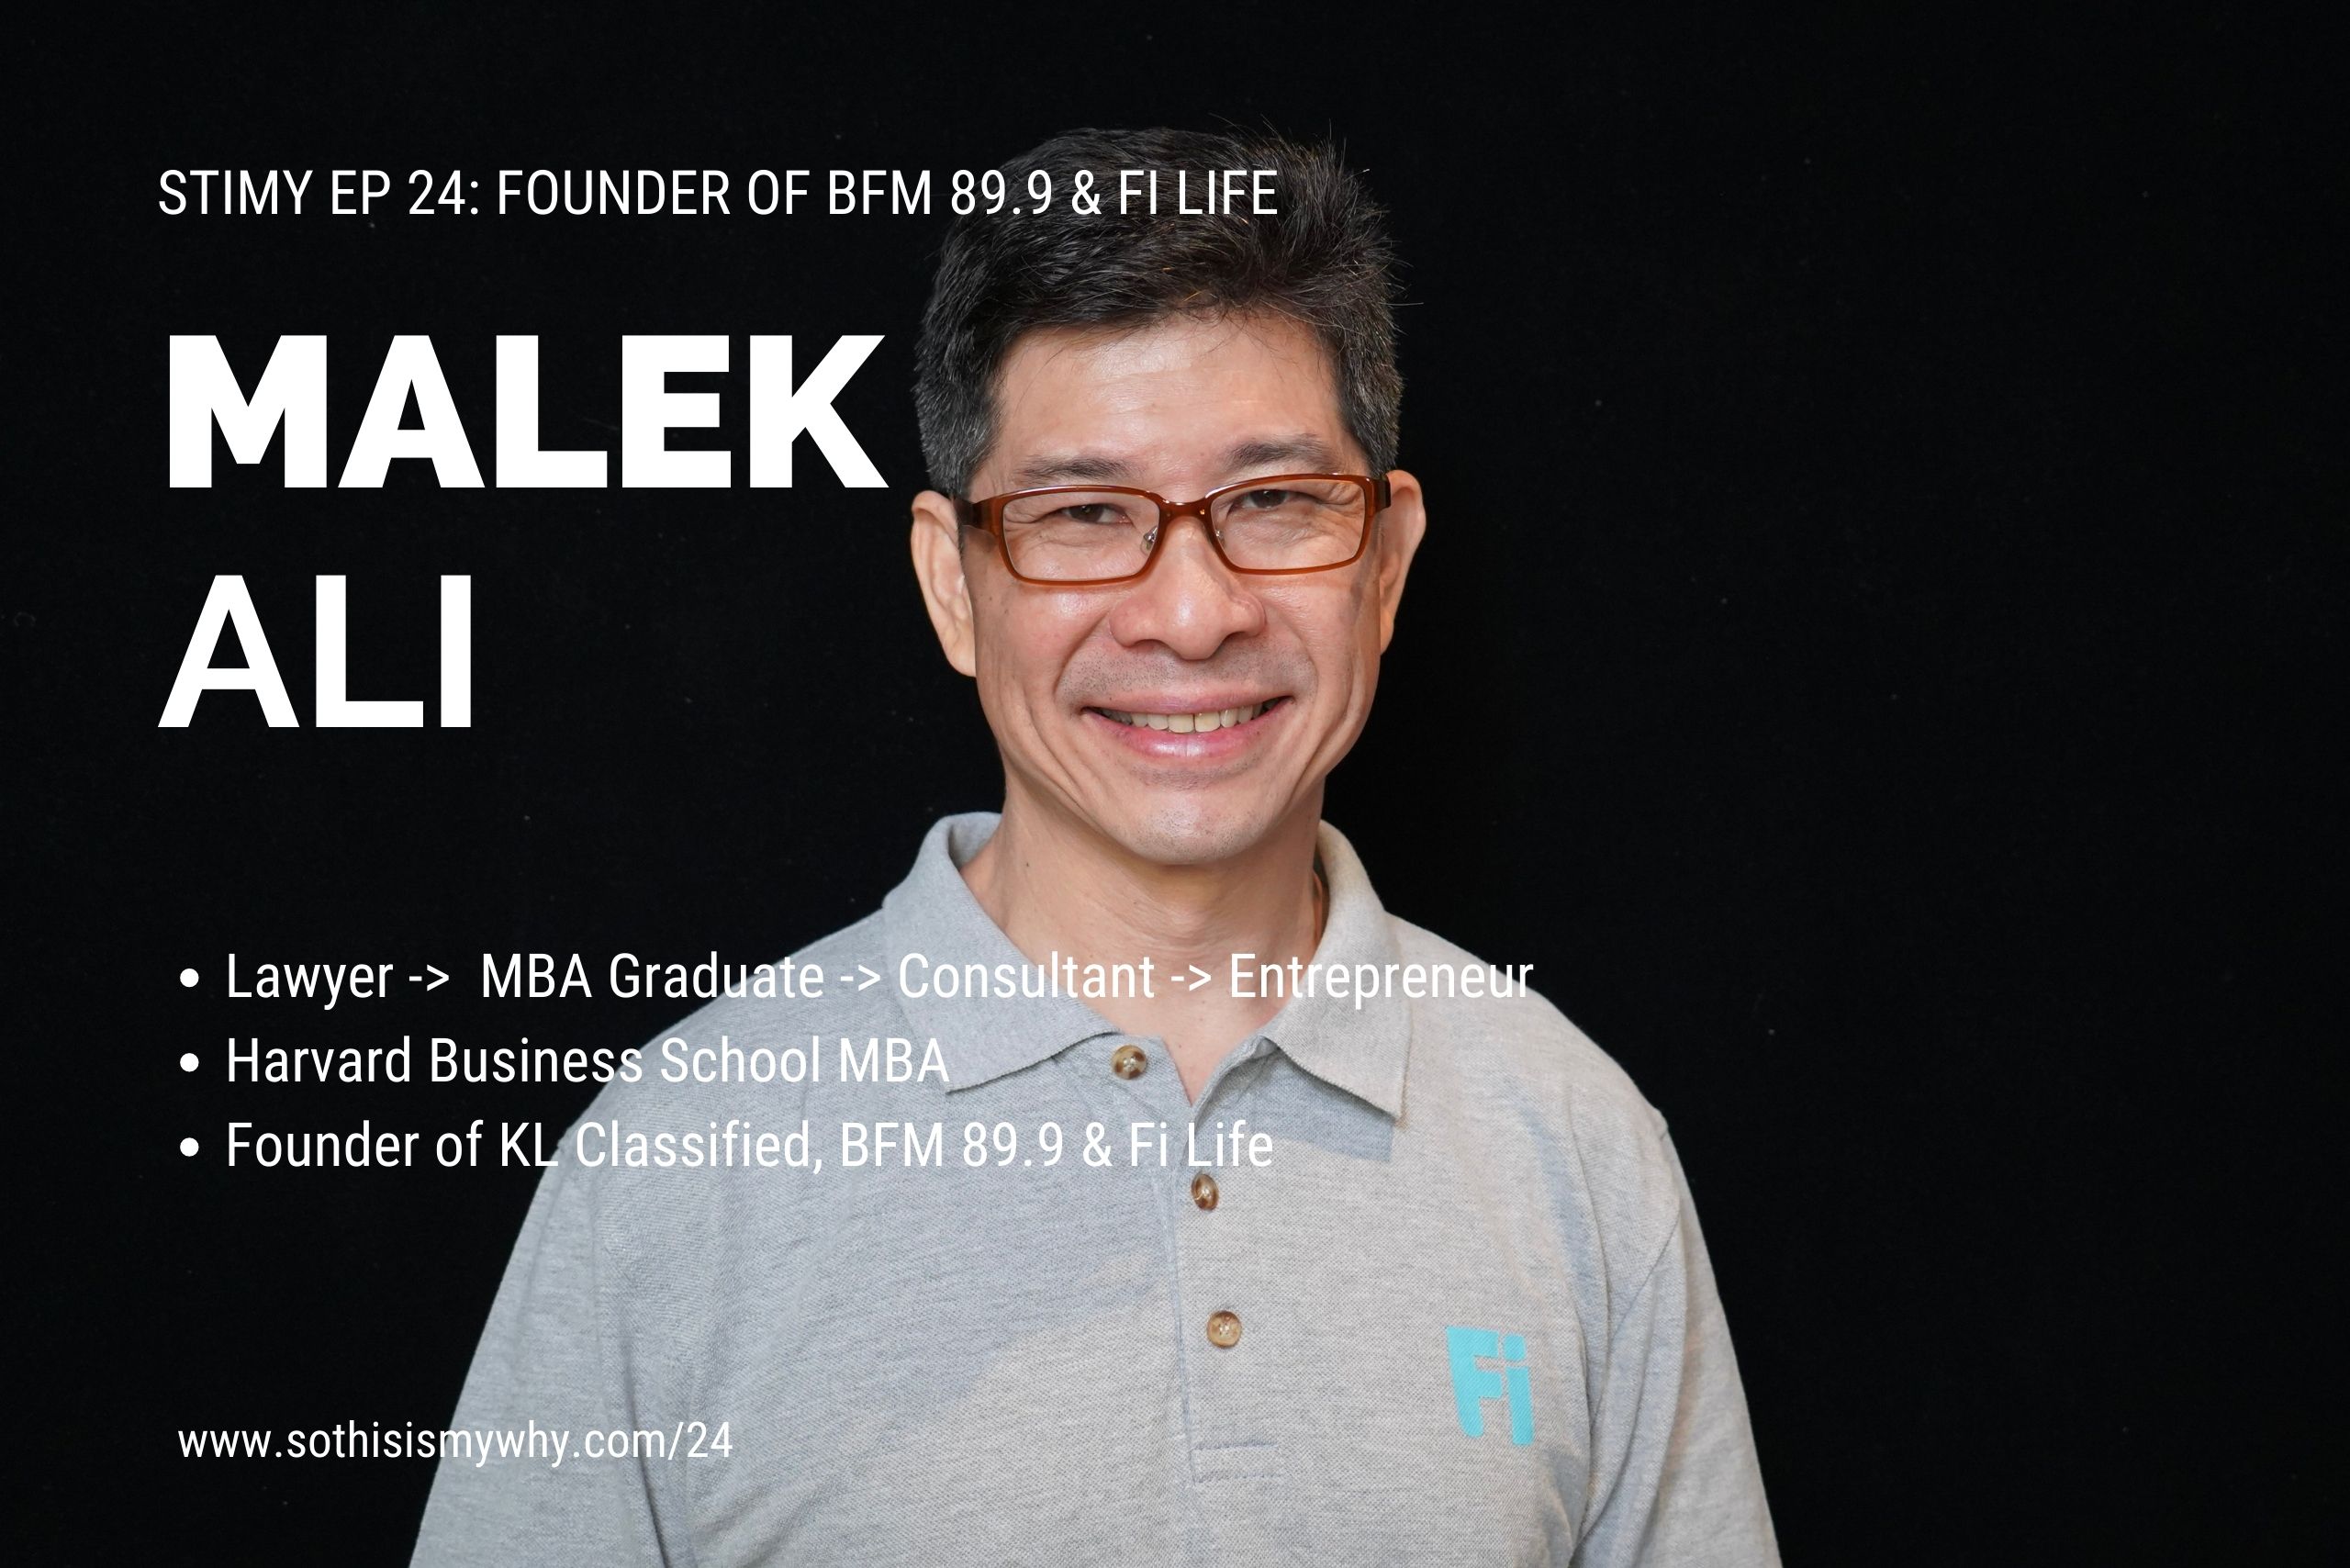 Malek Ali - Founder of KL Classified, BFM 89.9 & Fi Life